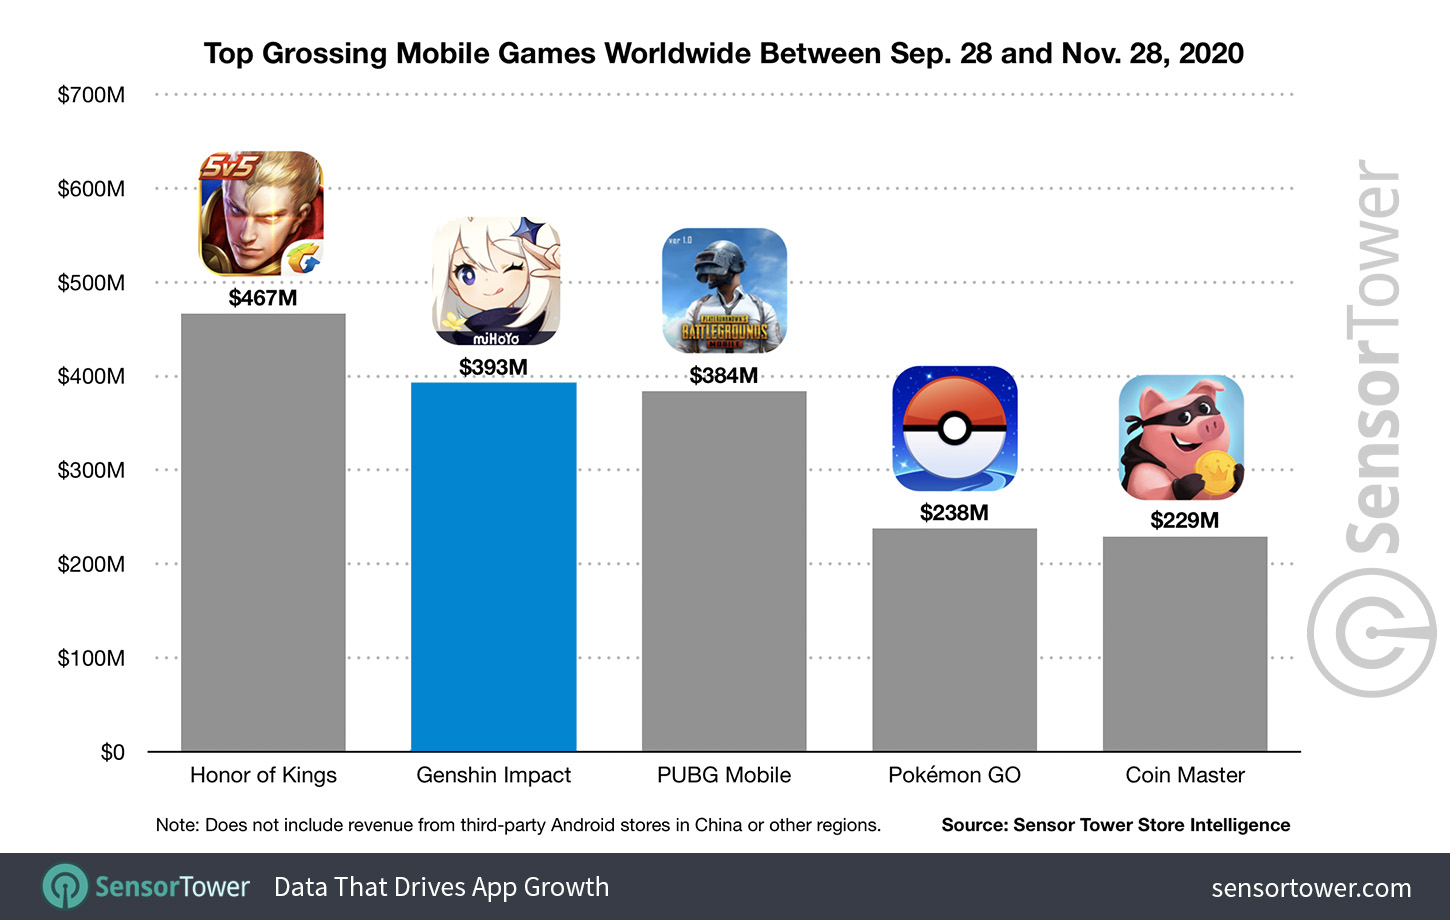 Top Grossing Mobile Games Worldwide Between September 28 and November 28 2020